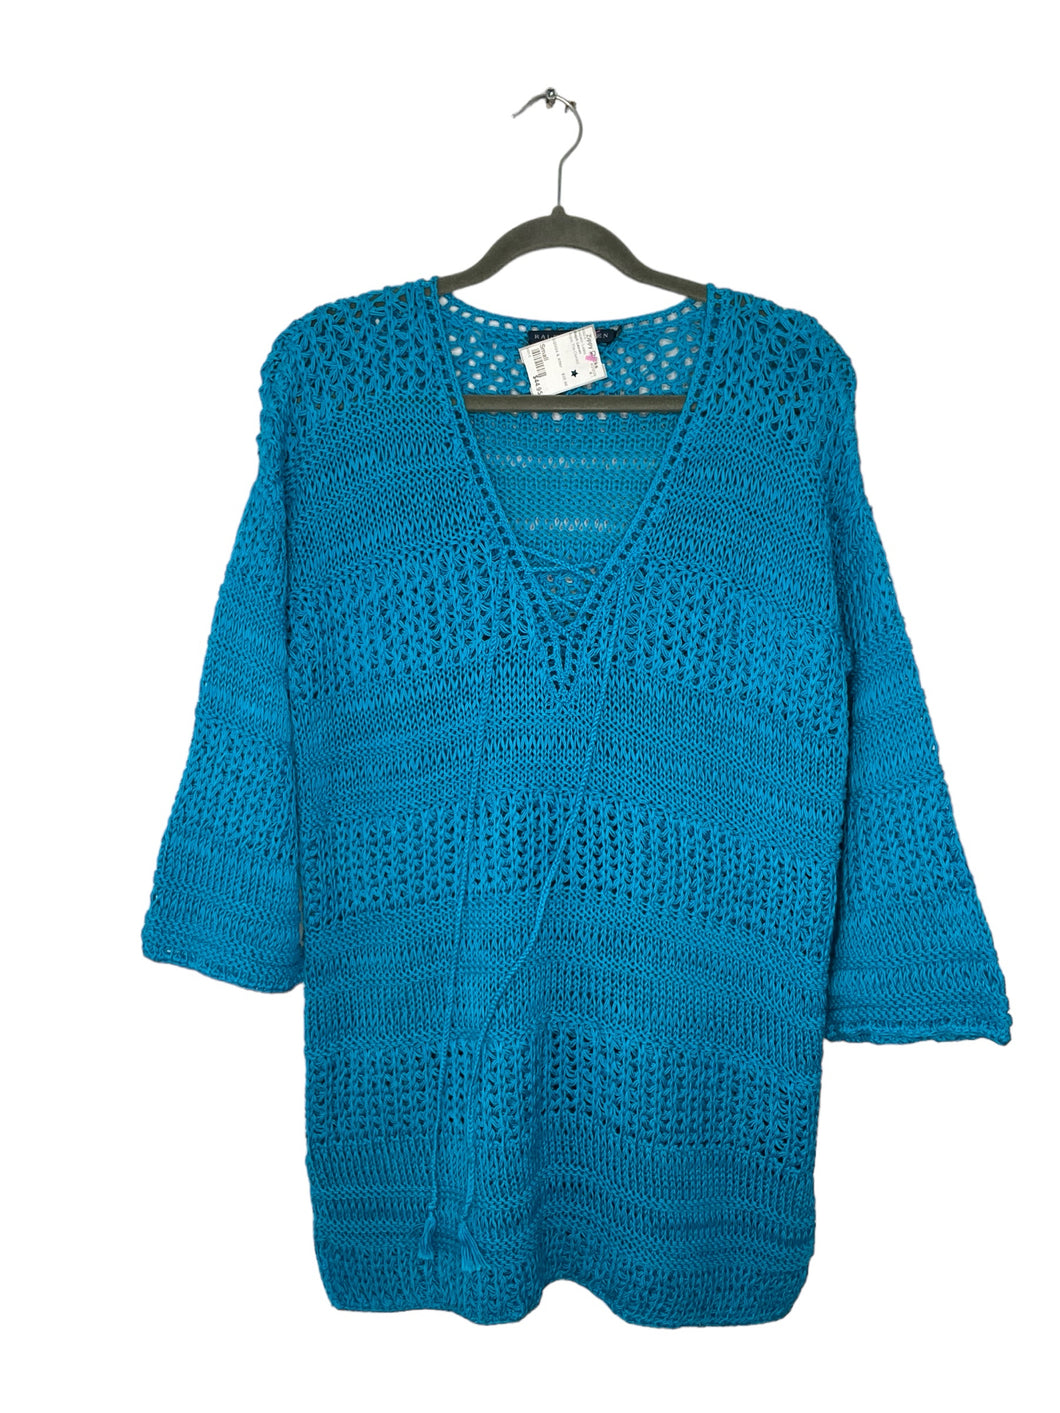 Ralph Lauren Size Small Aqua Sweater- Ladies